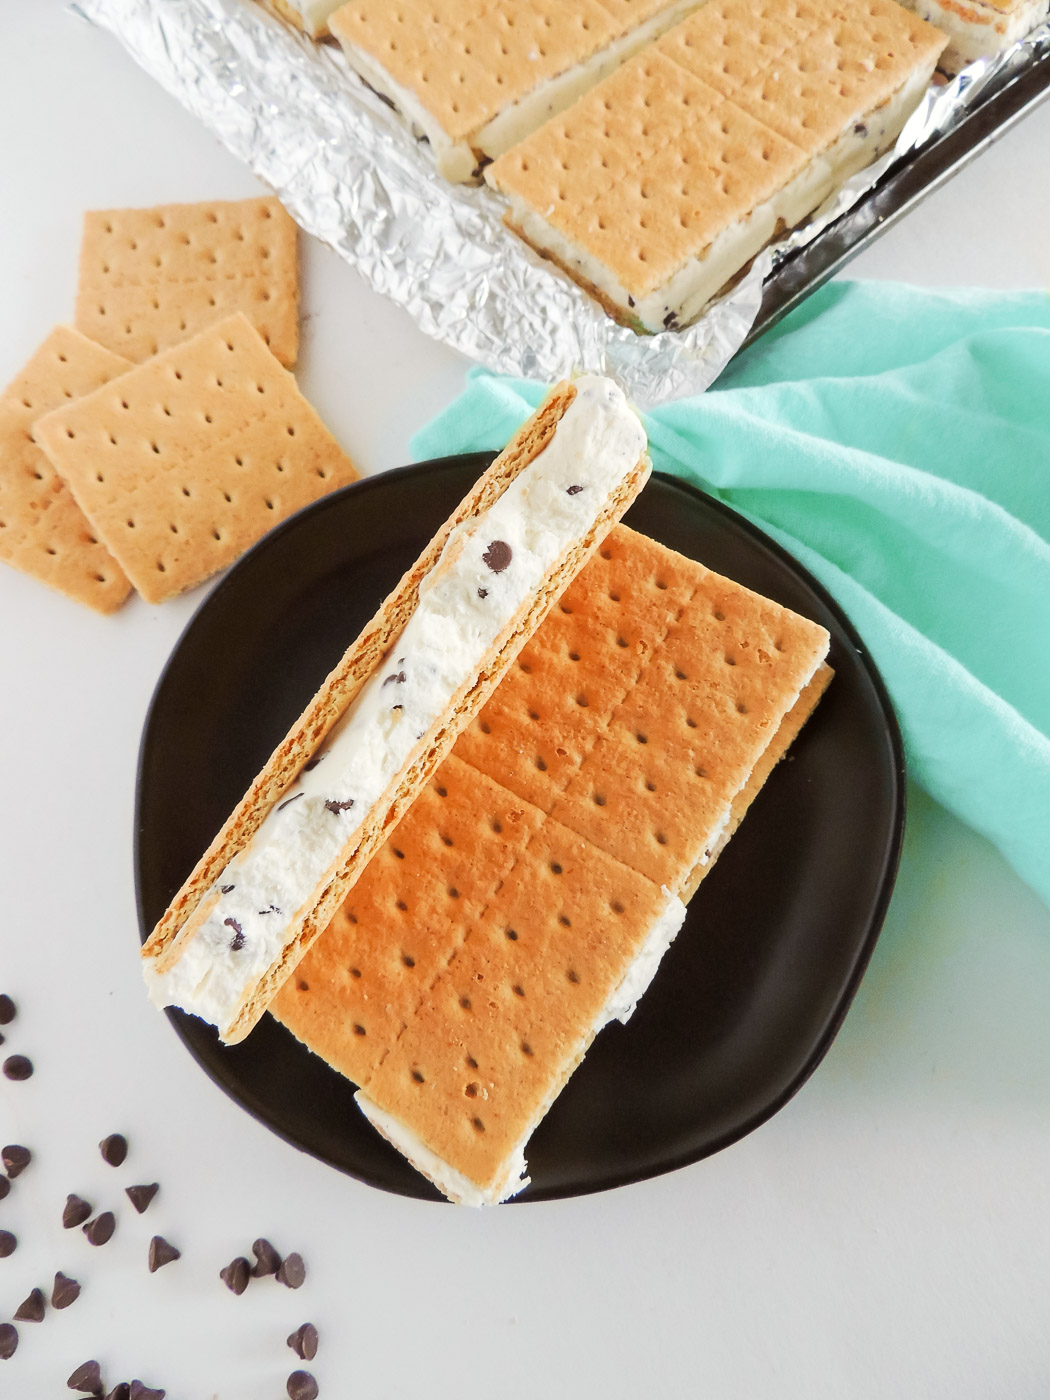 Homemade chocolate chip ice cream sandwiches on a blac plate near a green napkin.